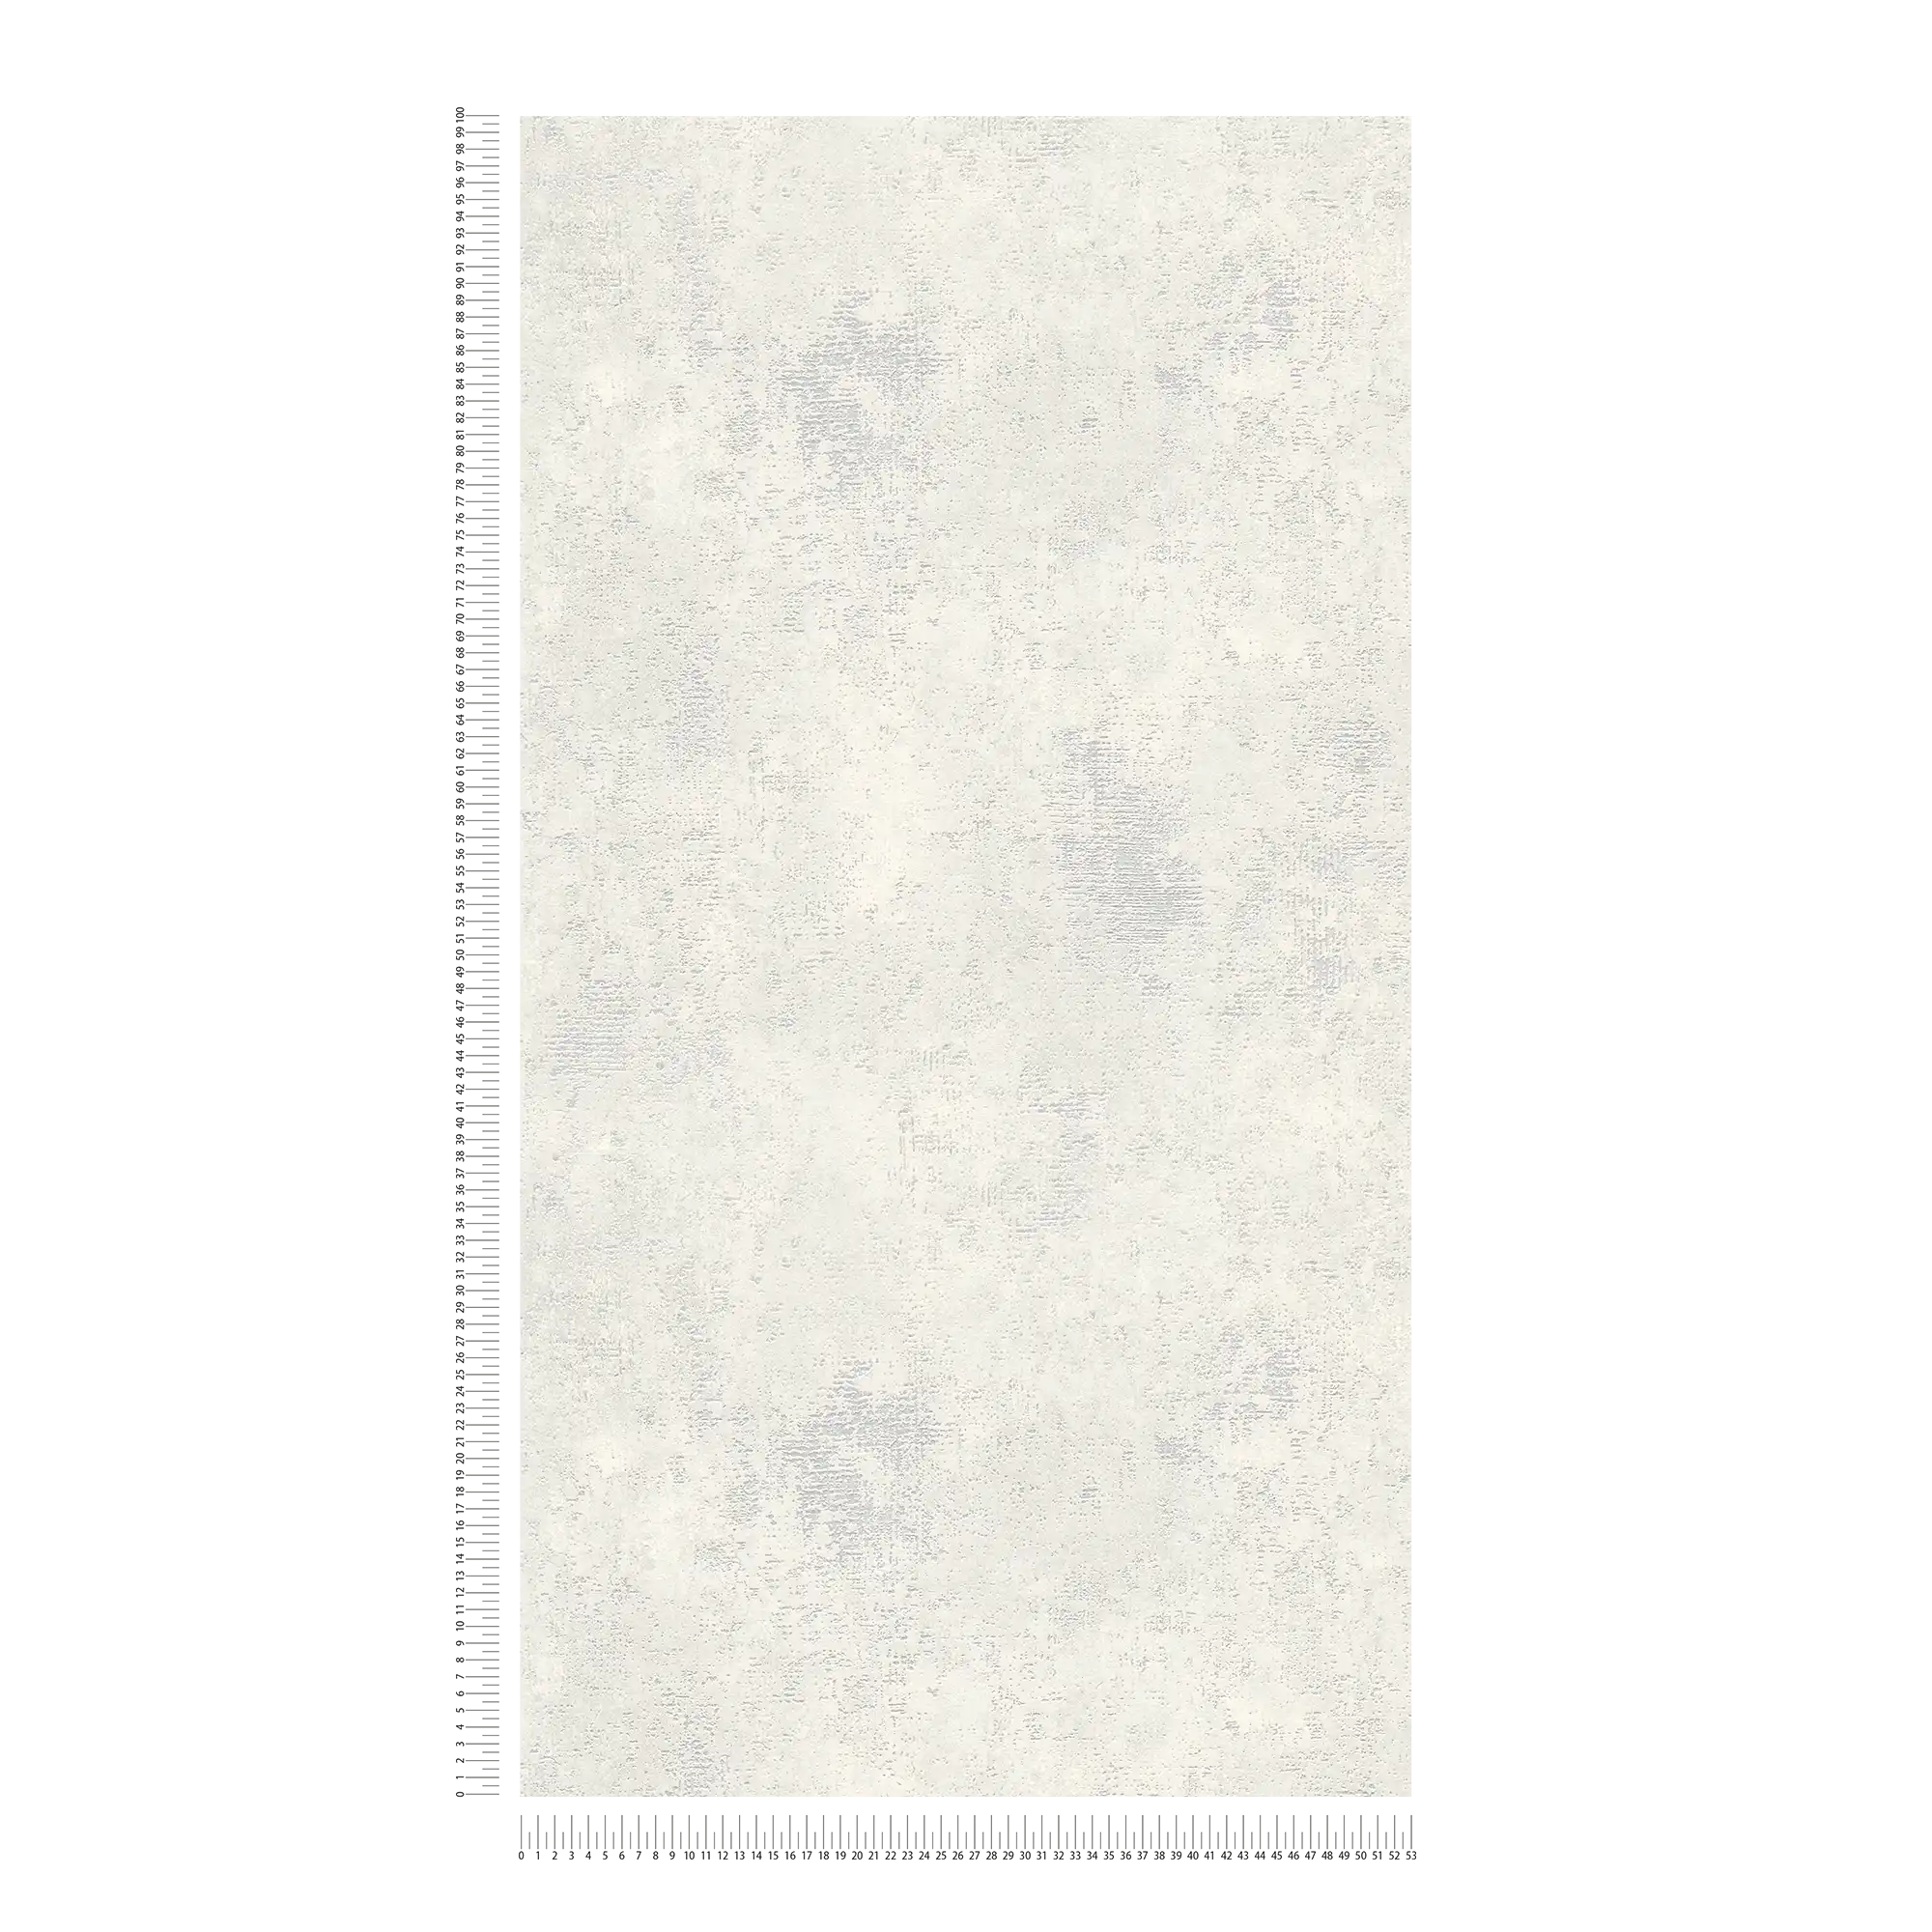             Cream white wallpaper with texture design - cream, metallic
        